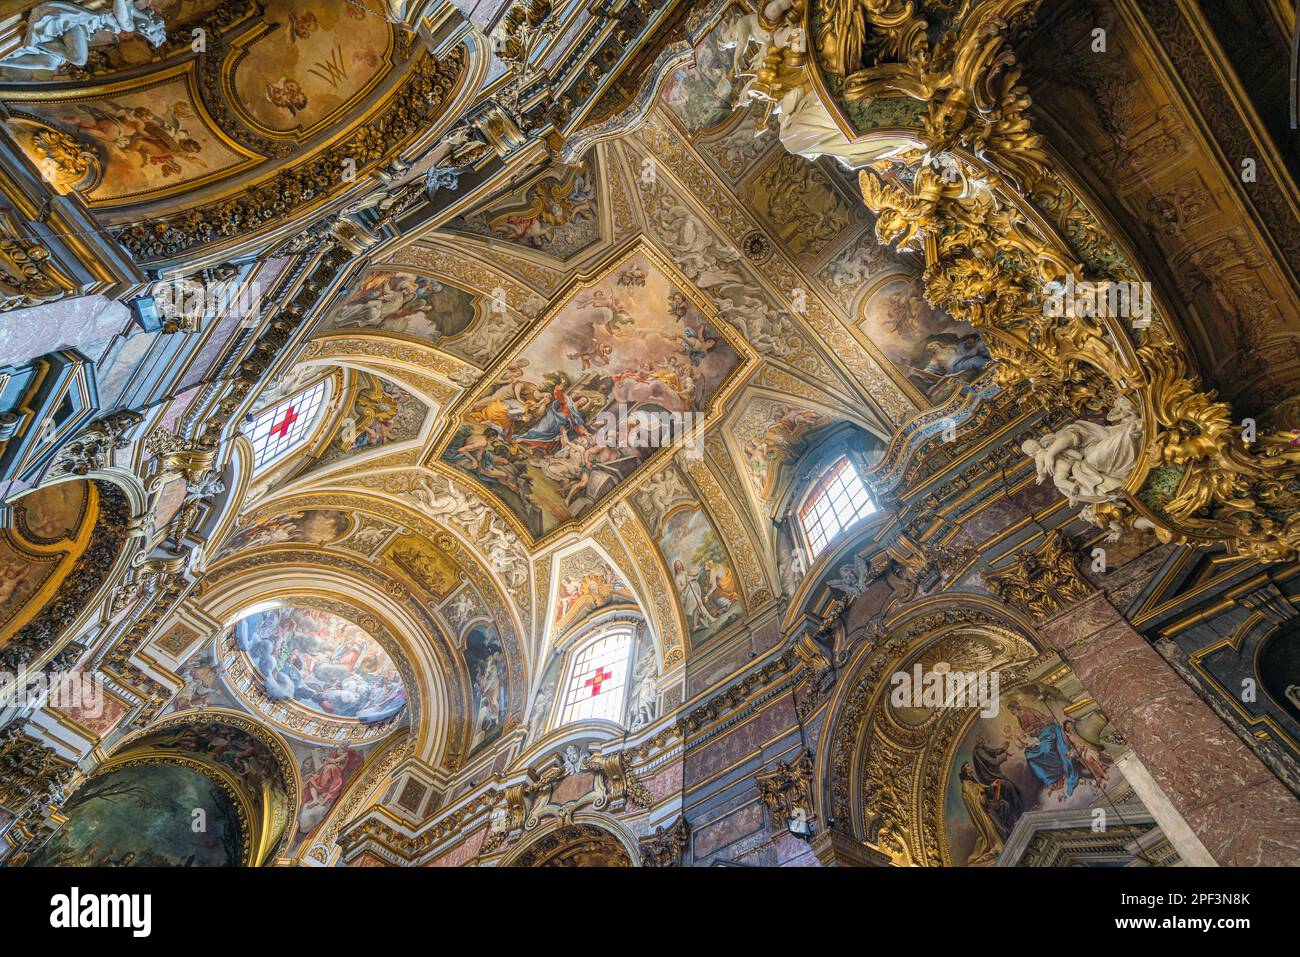 The marvelous interior from the Church of Santa Maria Maddalena in Rome, Italy. Stock Photo